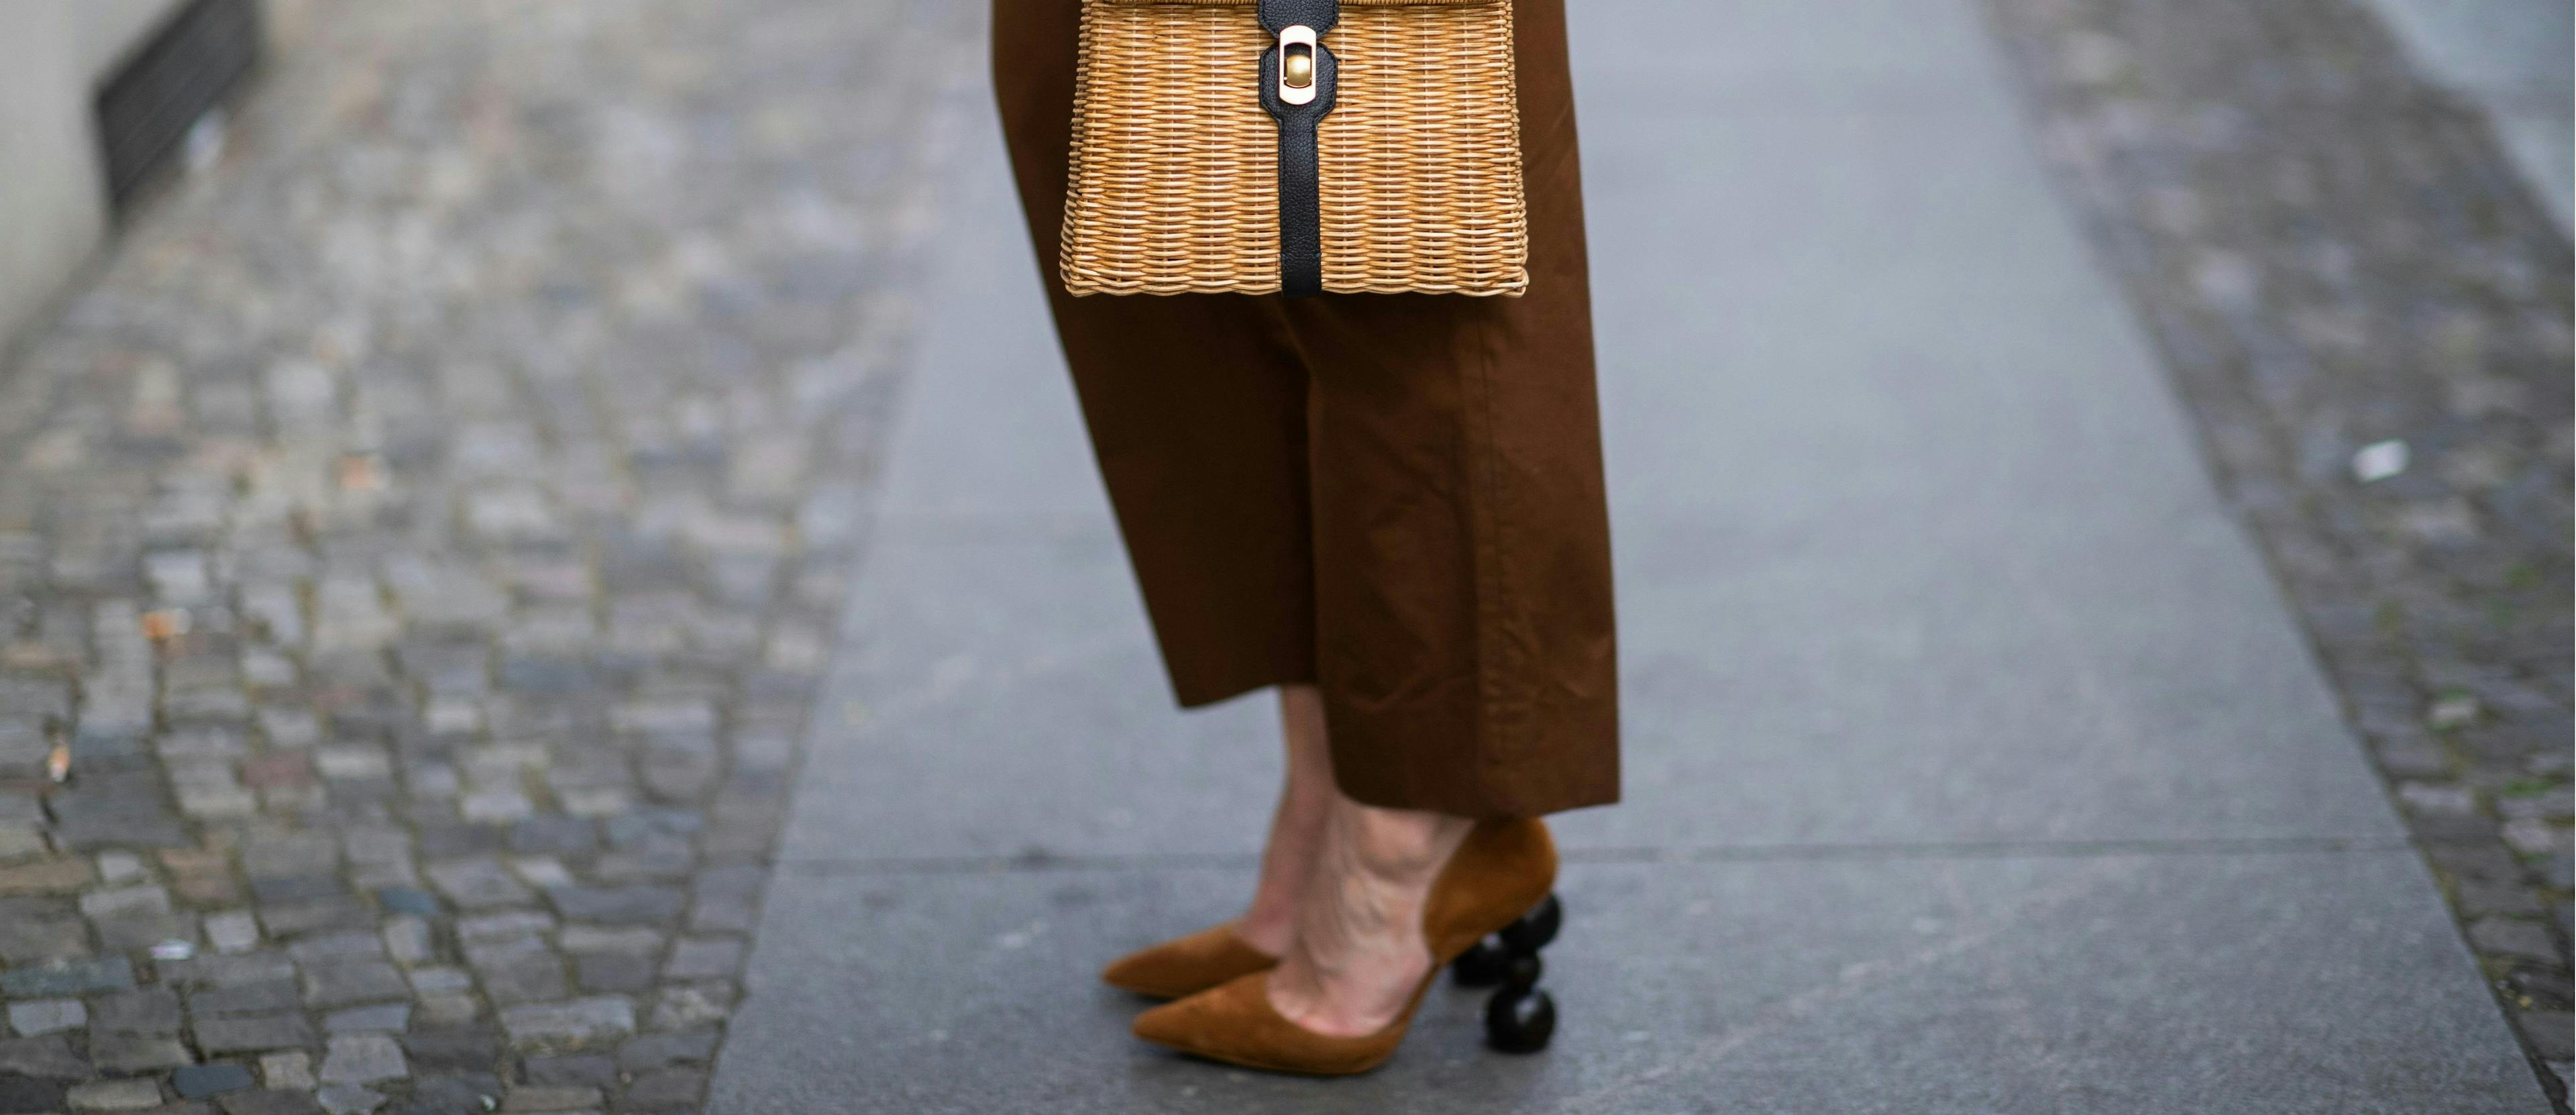 berlin clothing apparel human person handbag accessories bag footwear shoe purse